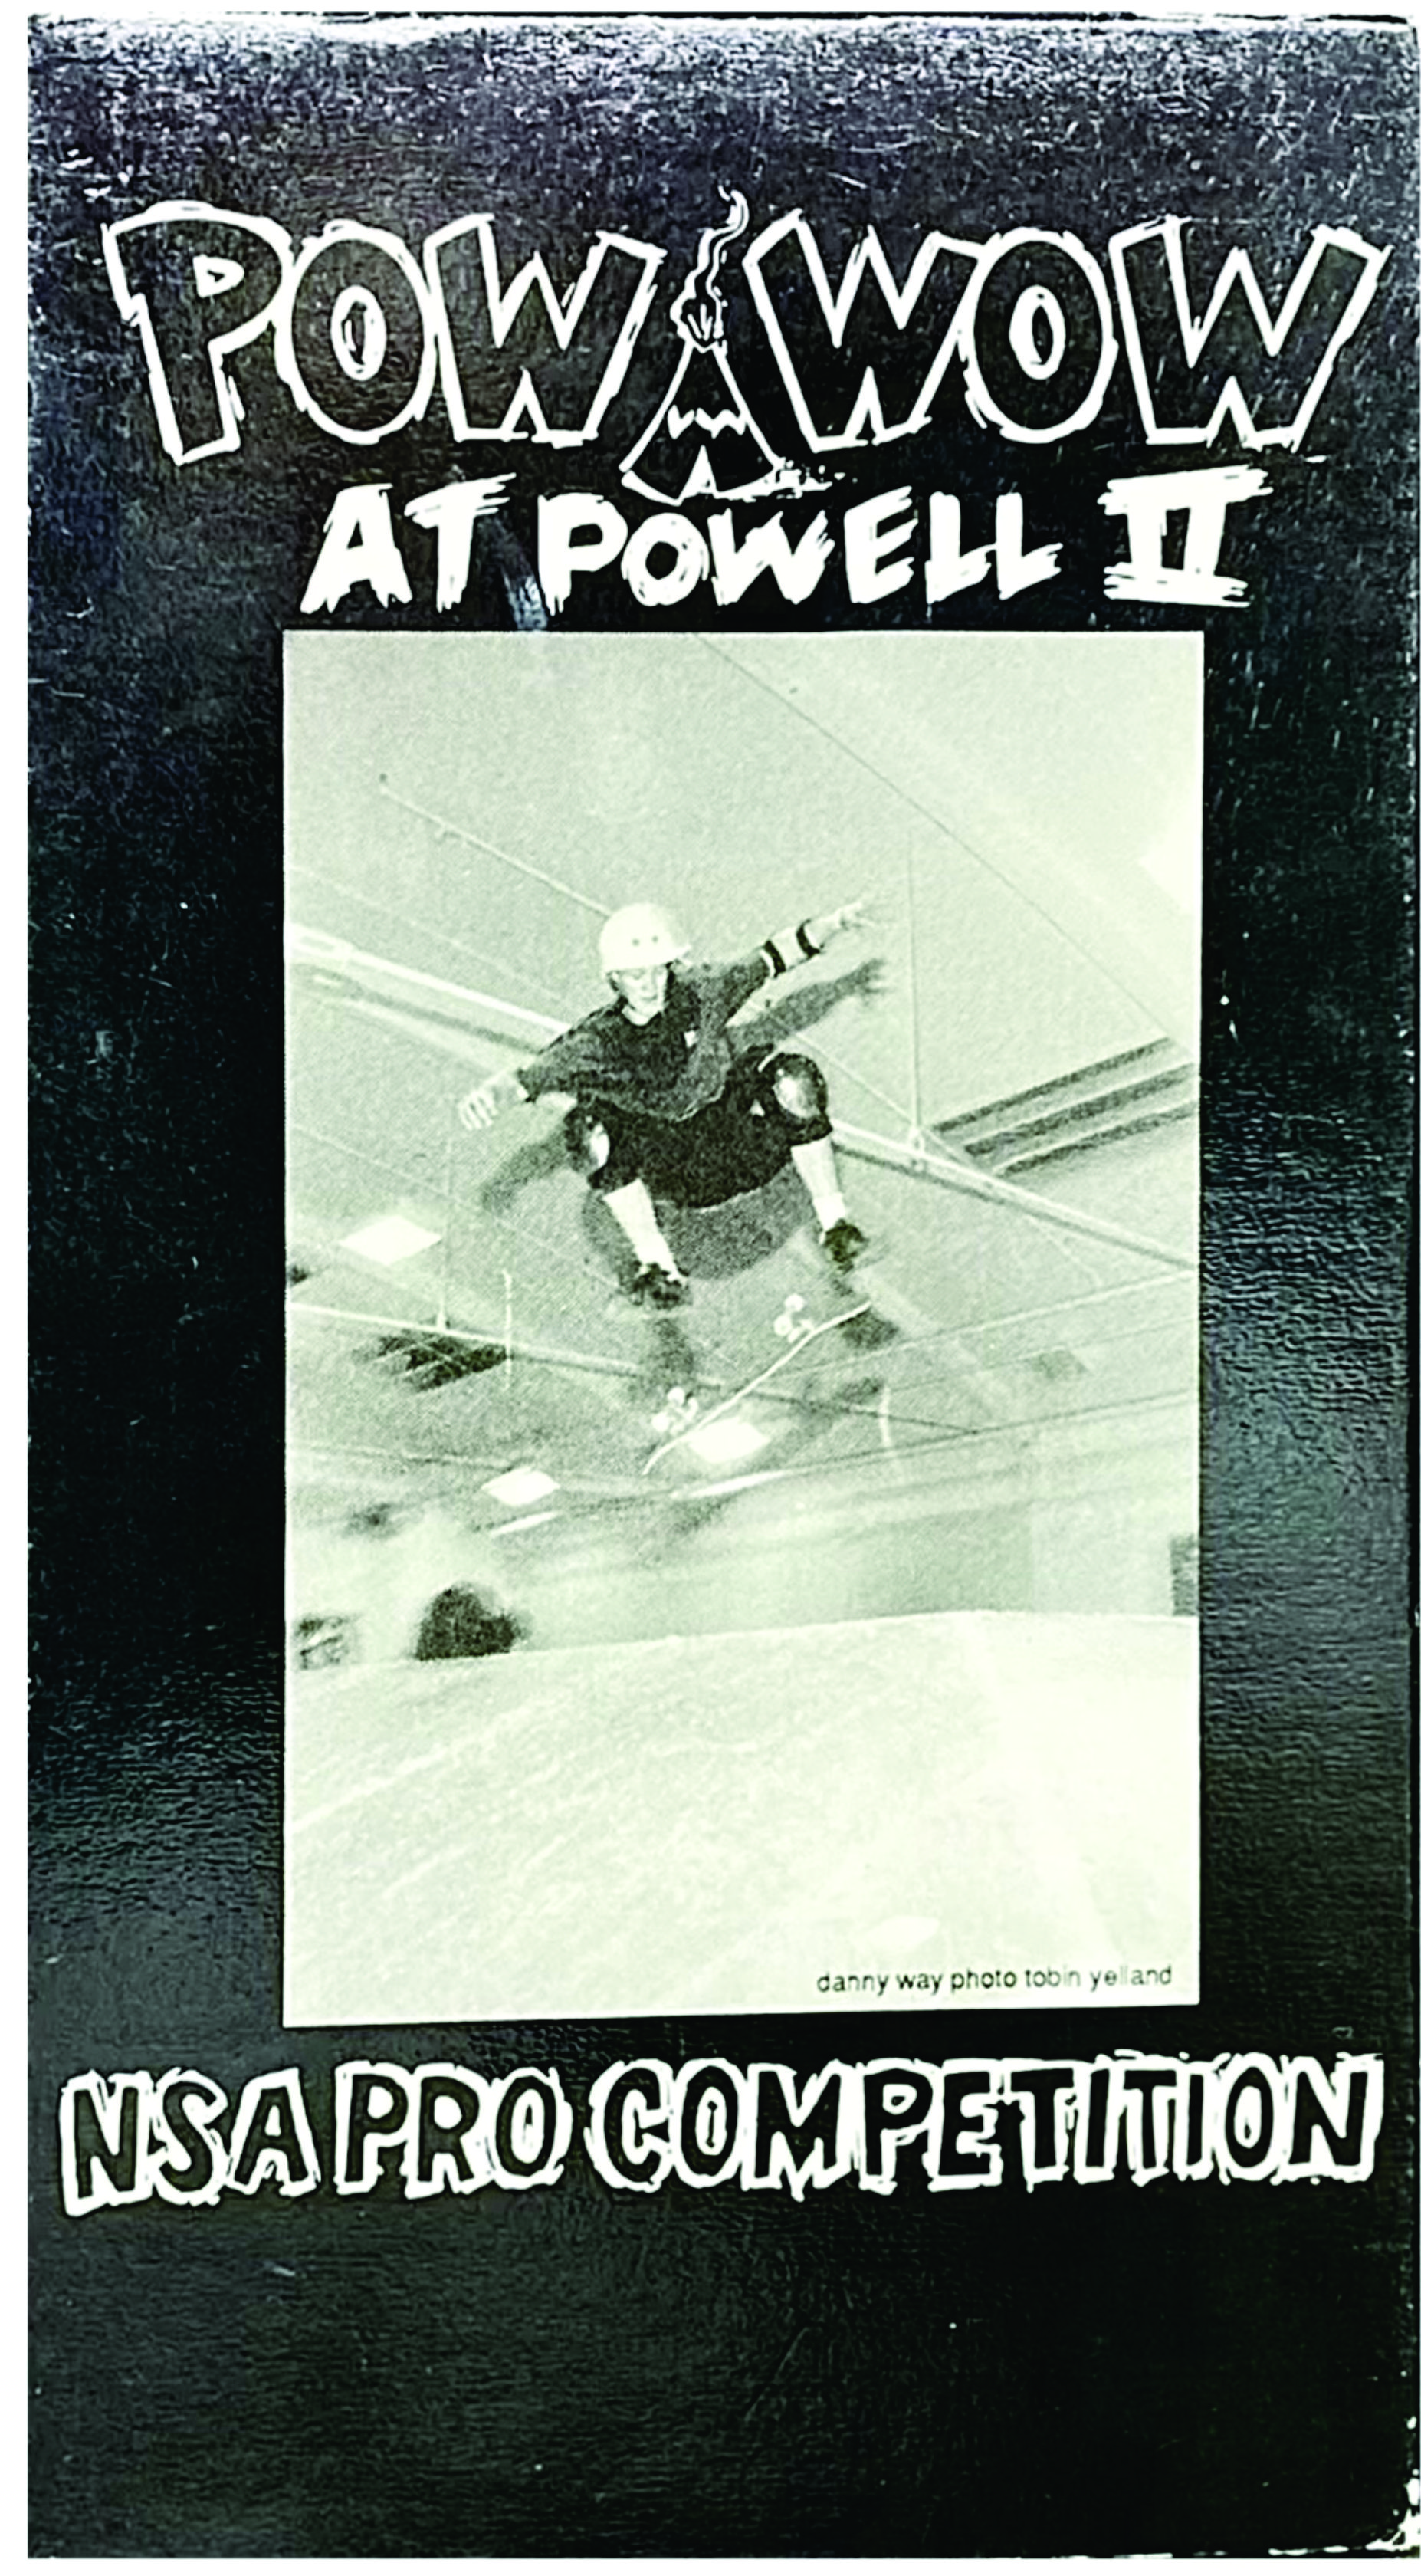 NSA - Pow Wow At Powell II cover art